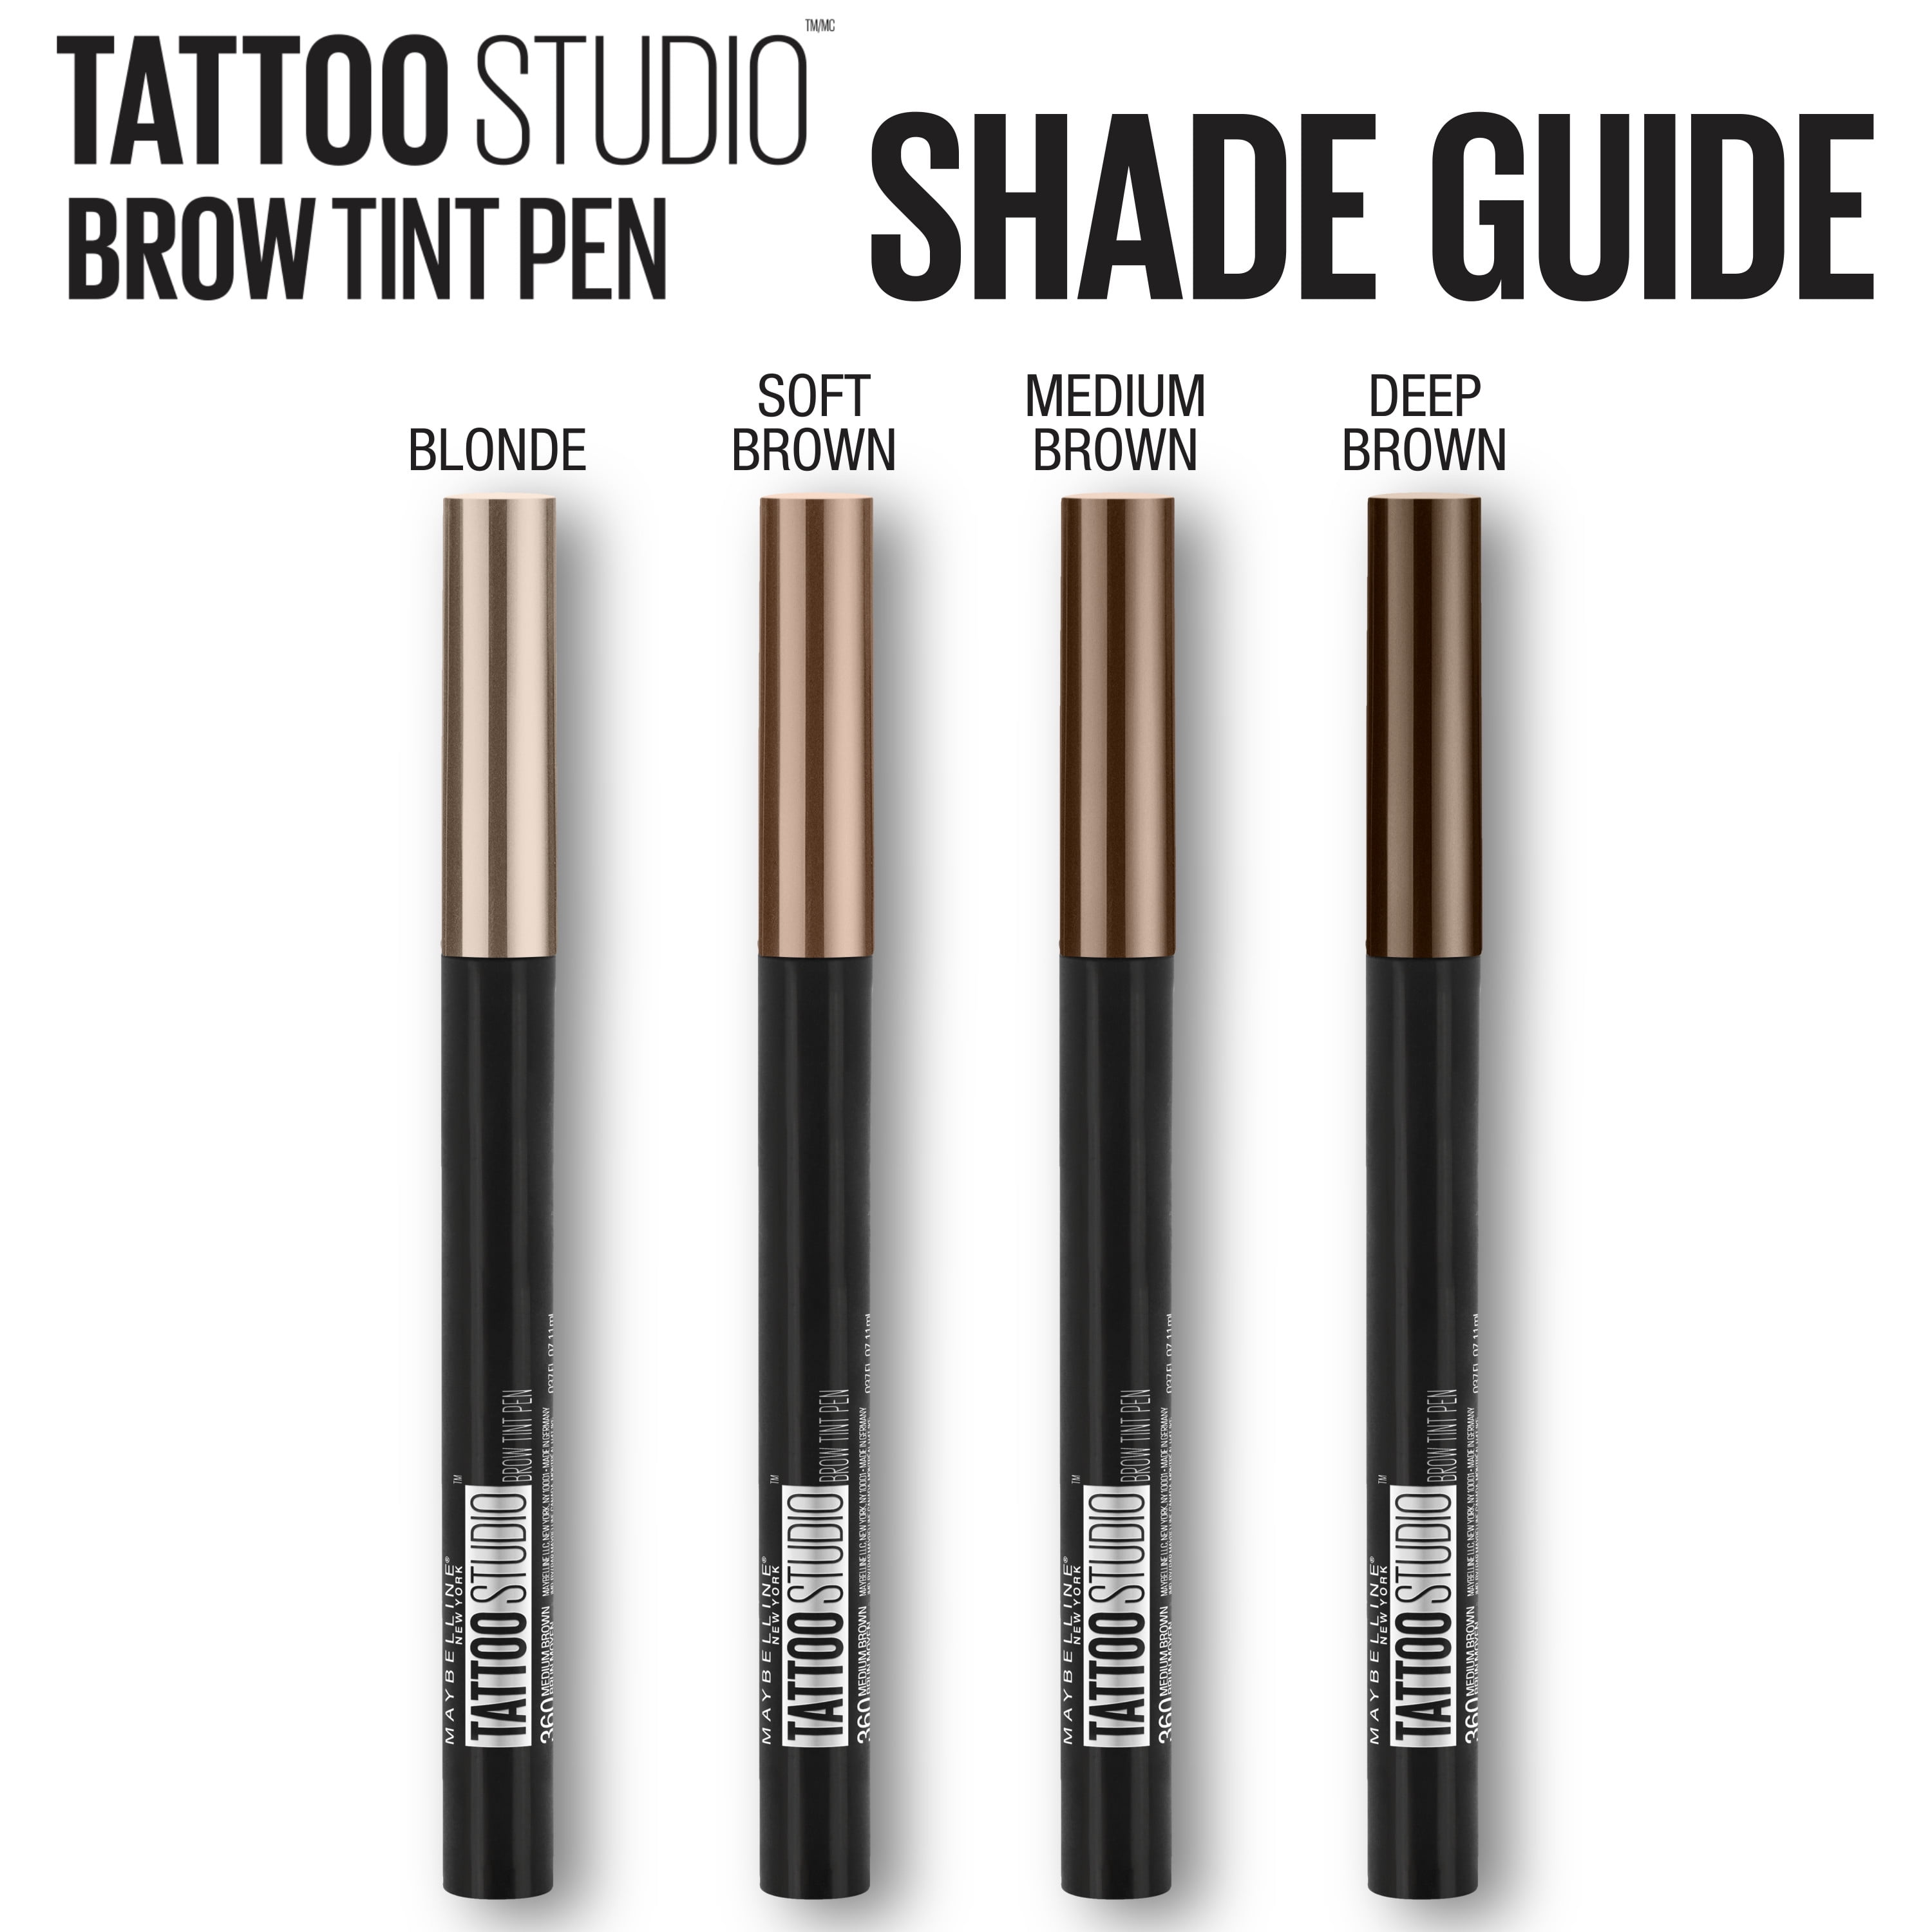 Civiel sirene toegang Maybelline Tattoo Studio Brow Tint Pen Makeup, Soft Brown - Walmart.com